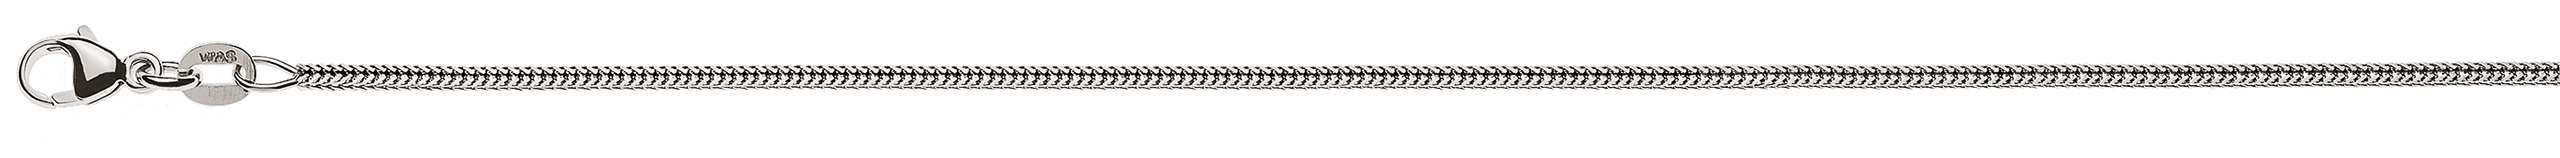 AURONOS Prestige Collier en or blanc 18K queue de renard diamantée 50cm 1.2mm